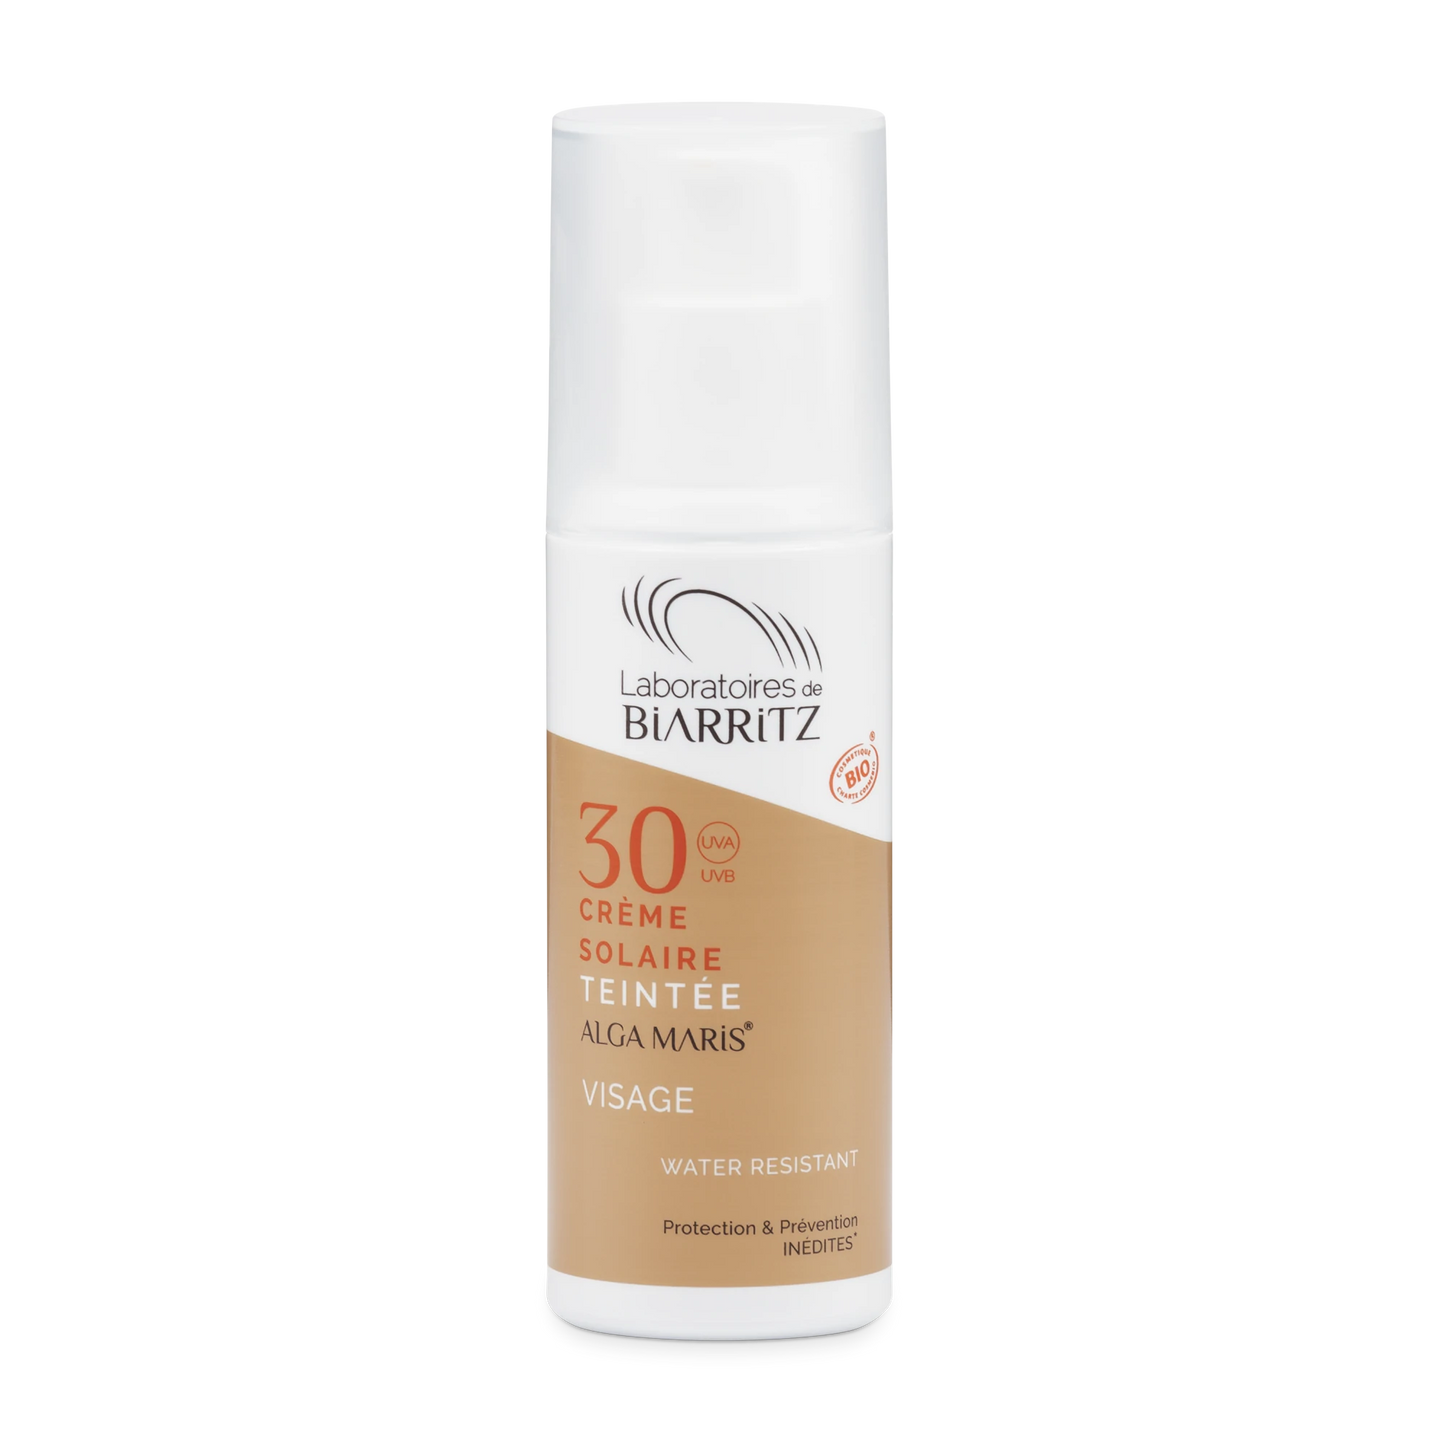 Laboratoires de Biarritz - ALGA MARIS Certified Organic Ivory Tinted Face sunscreen SPF30 有機紅海藻透薄潤色防曬面霜 SPF30